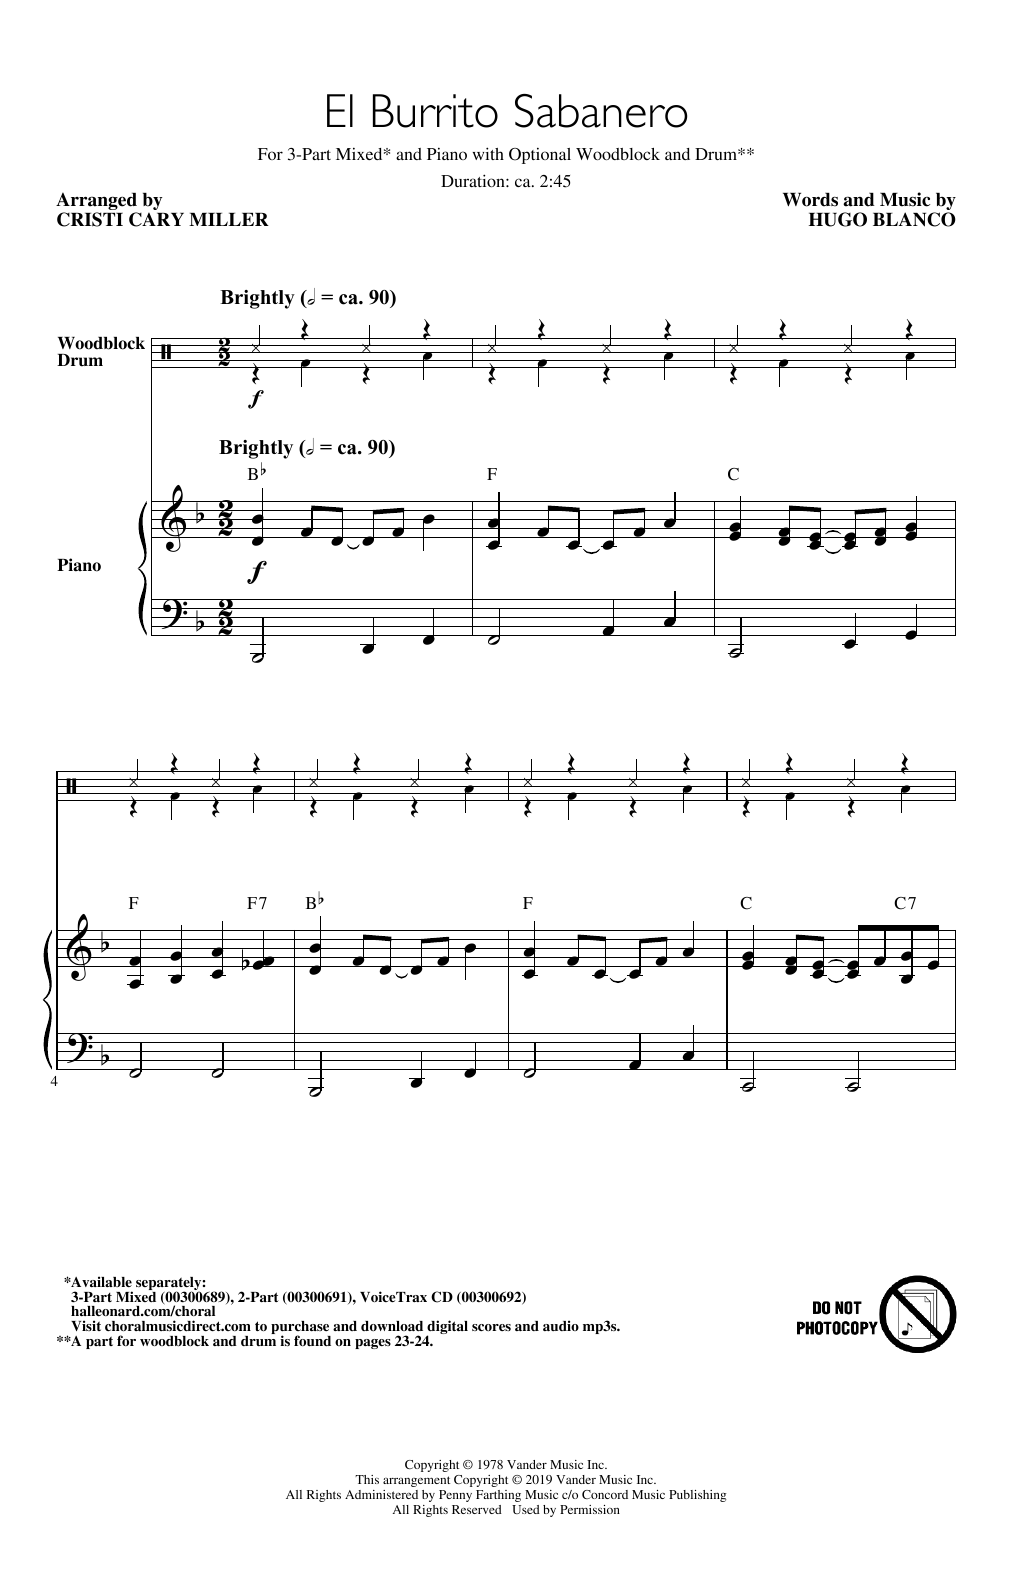 Download Hugo Blanco El Burrito Sabanero (Mi Burrito Sabanero) (arr. Cristi Cary Miller) Sheet Music and learn how to play 2-Part Choir PDF digital score in minutes